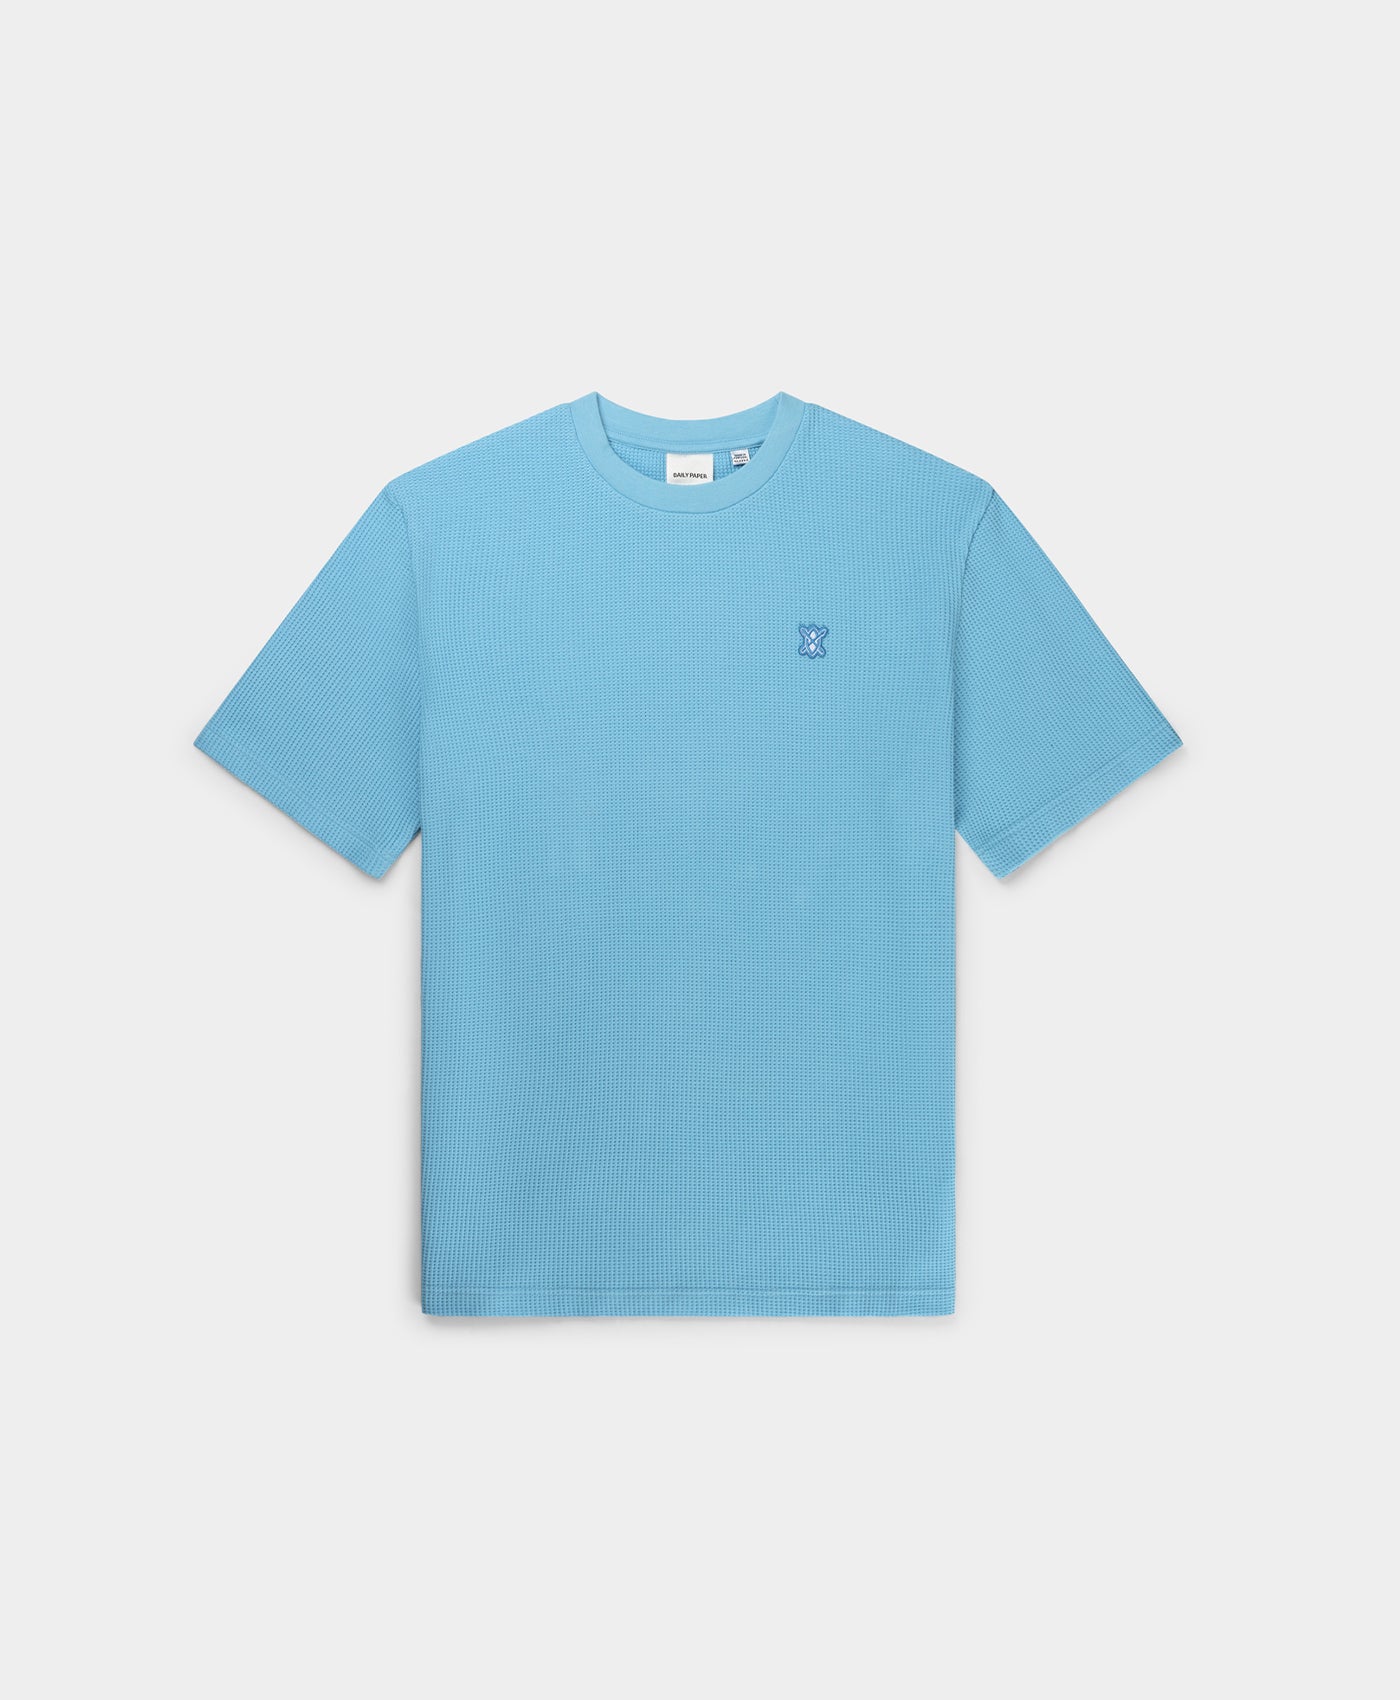 DP - Baby Blue Renzy T-Shirt - Packshot - Front